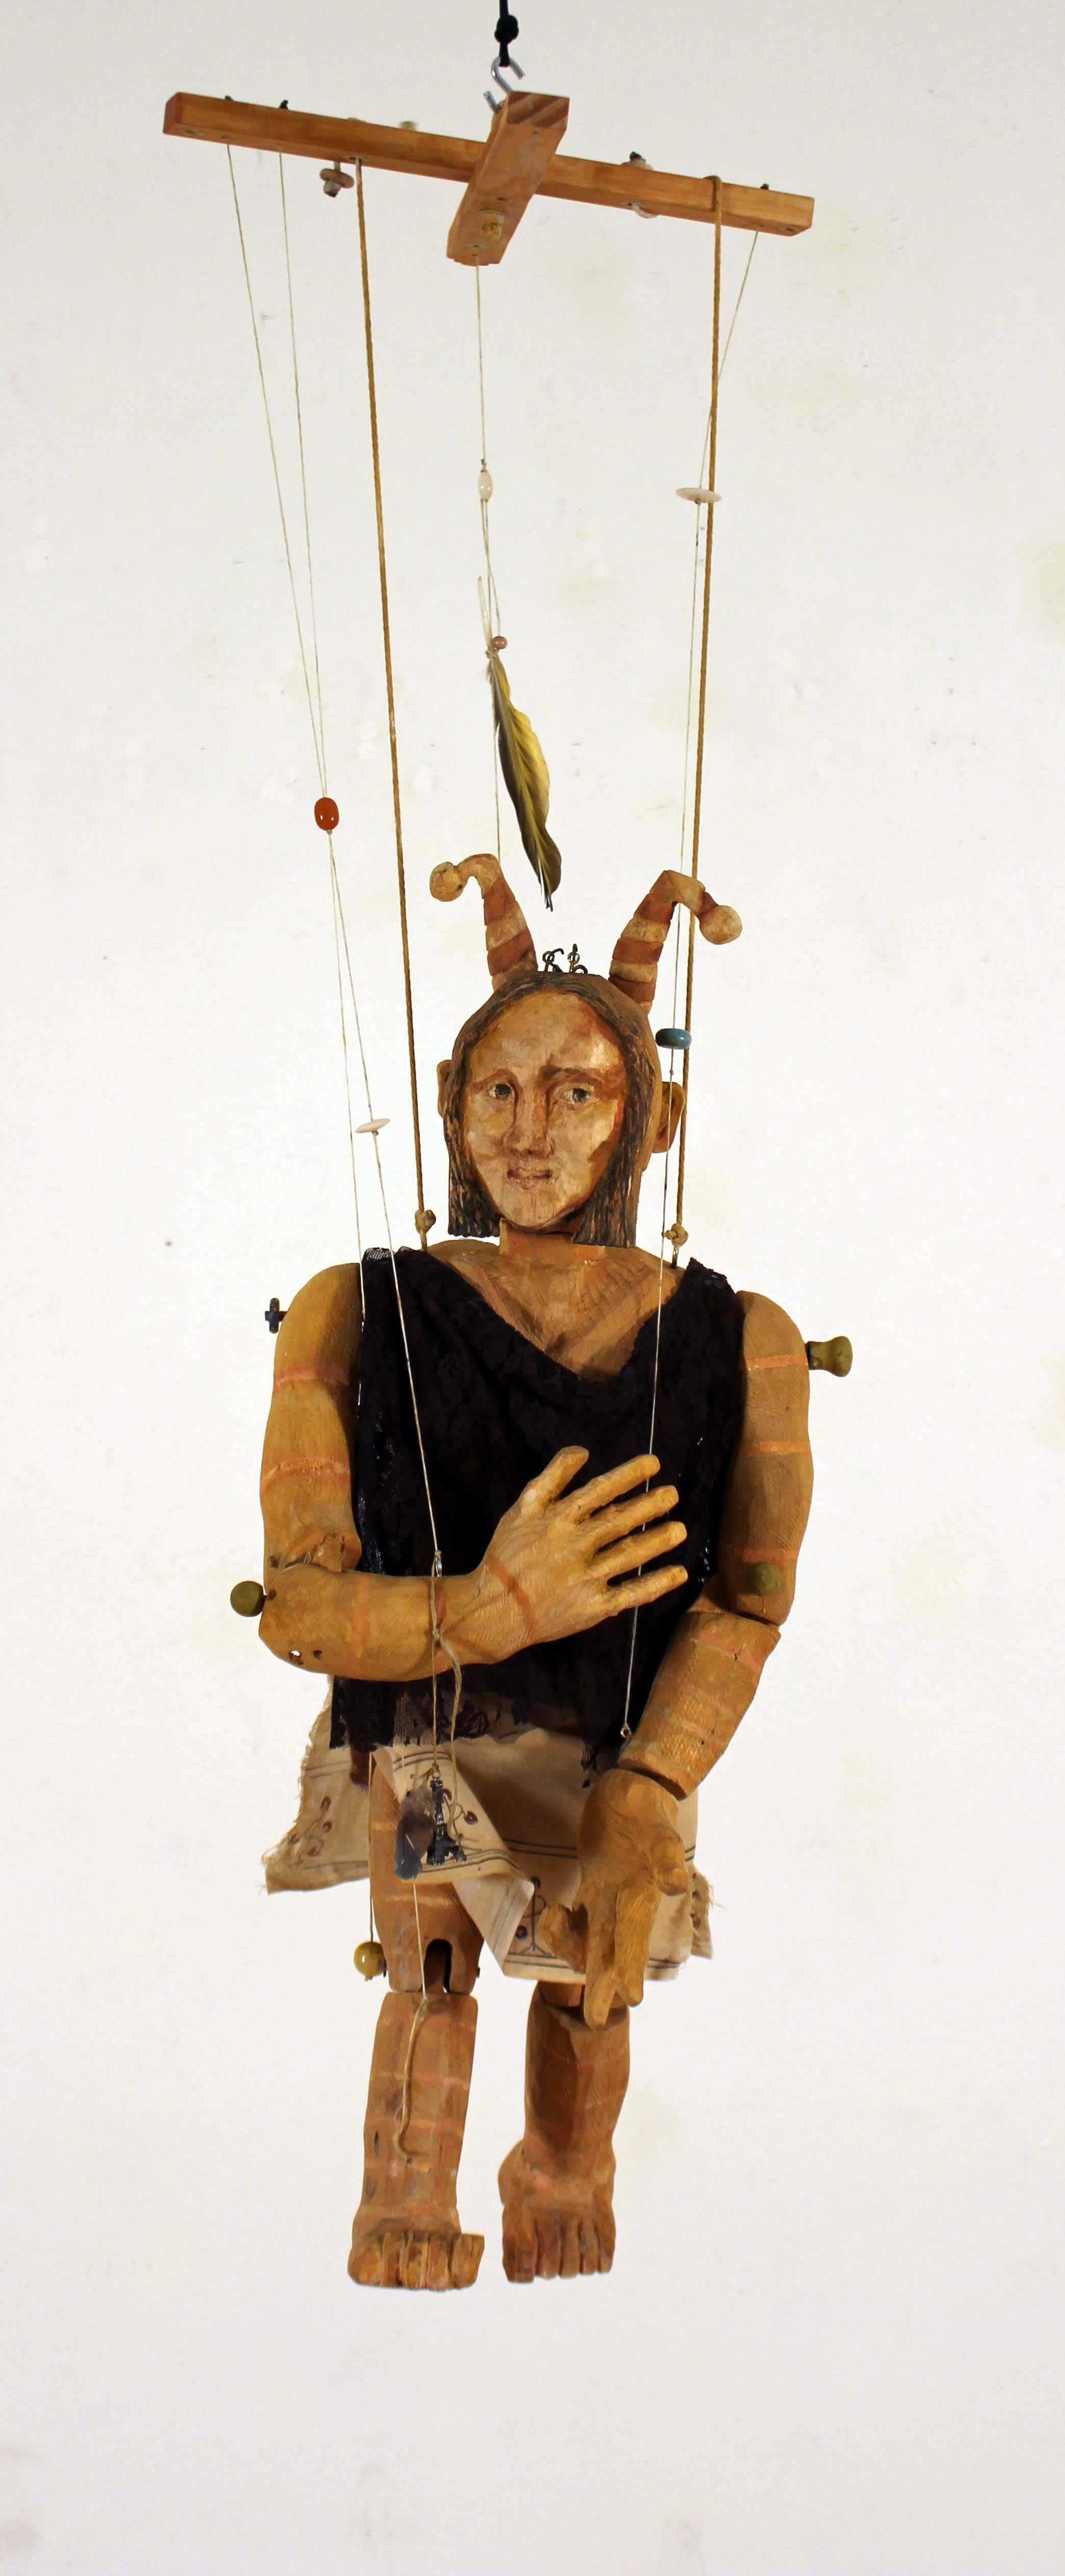 Armond Lara Figurative Sculpture - Mona Lisa Marionette